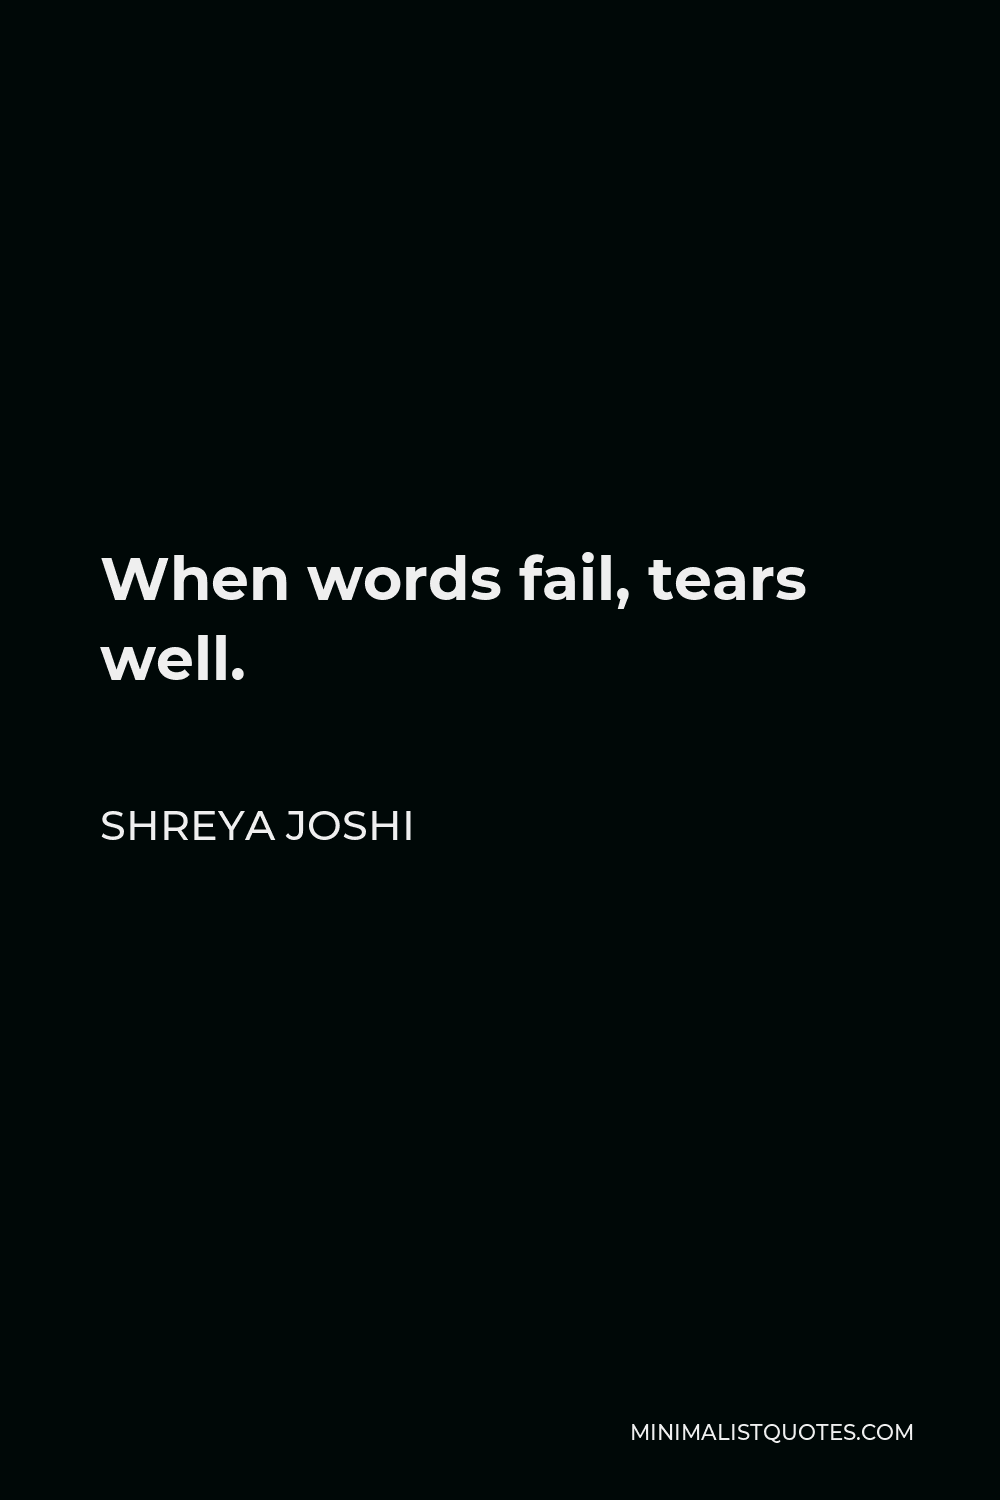 Shreya Joshi Quote - When words fail, tears well.